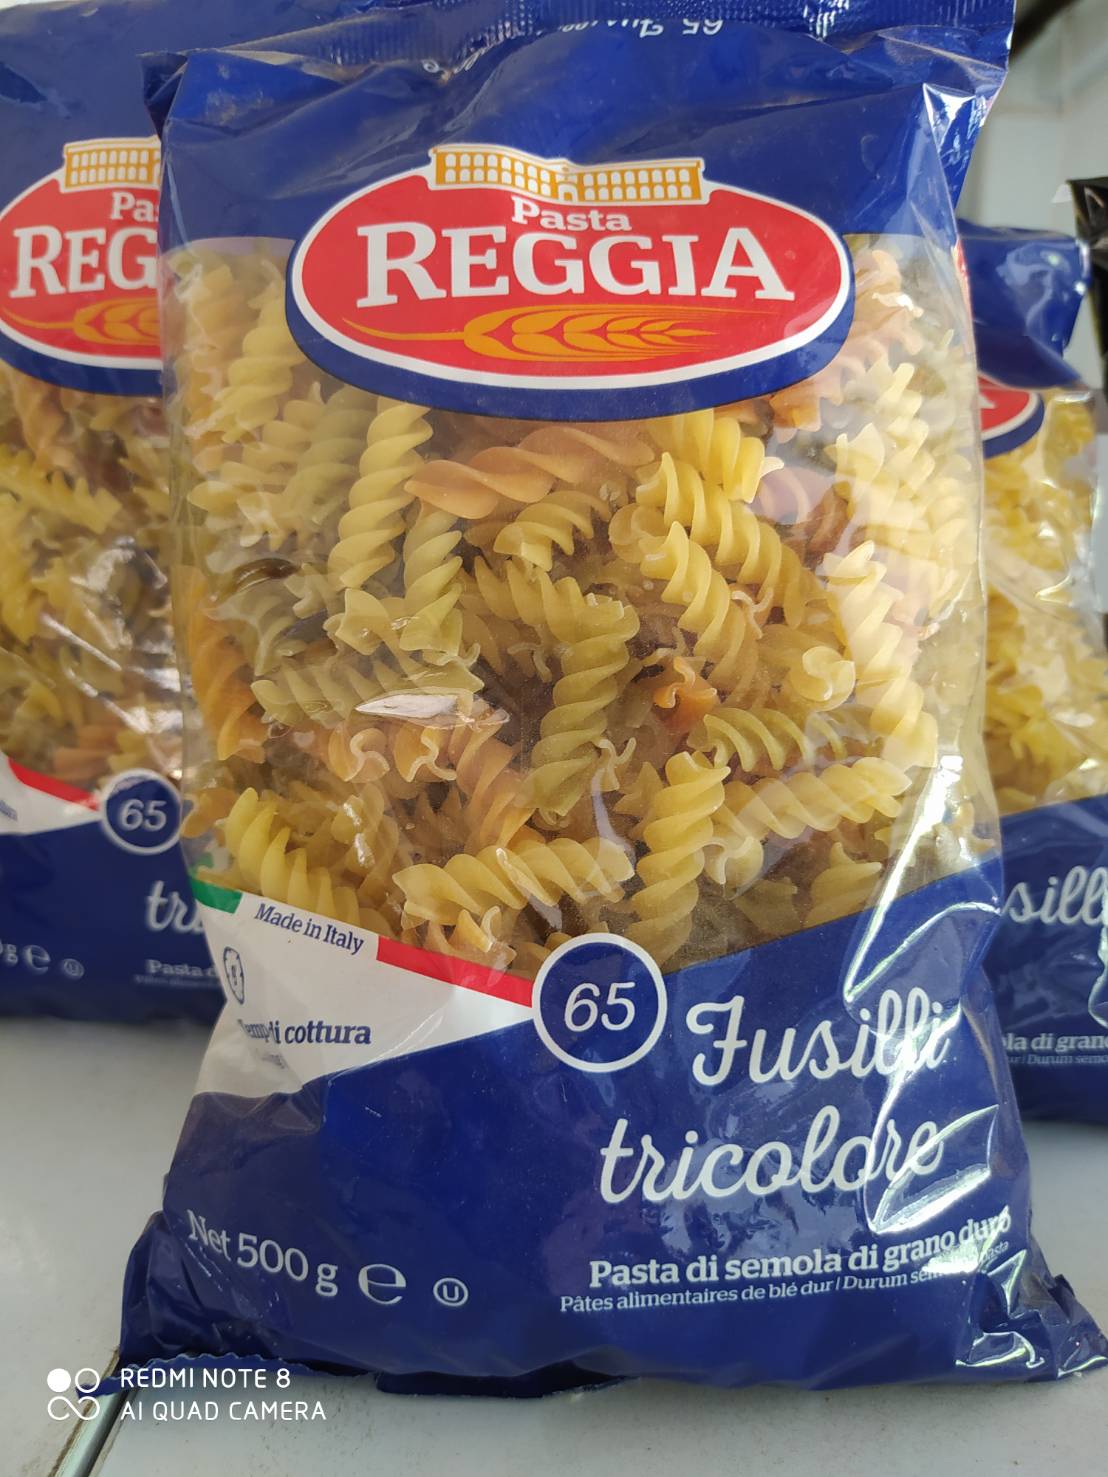 Pasta REGGIA พาสต้า ฟูซิลลิ เบอร์ 65 ขนาด  500g 80 บาท ซื้อ (>=5) ราคา ฿75